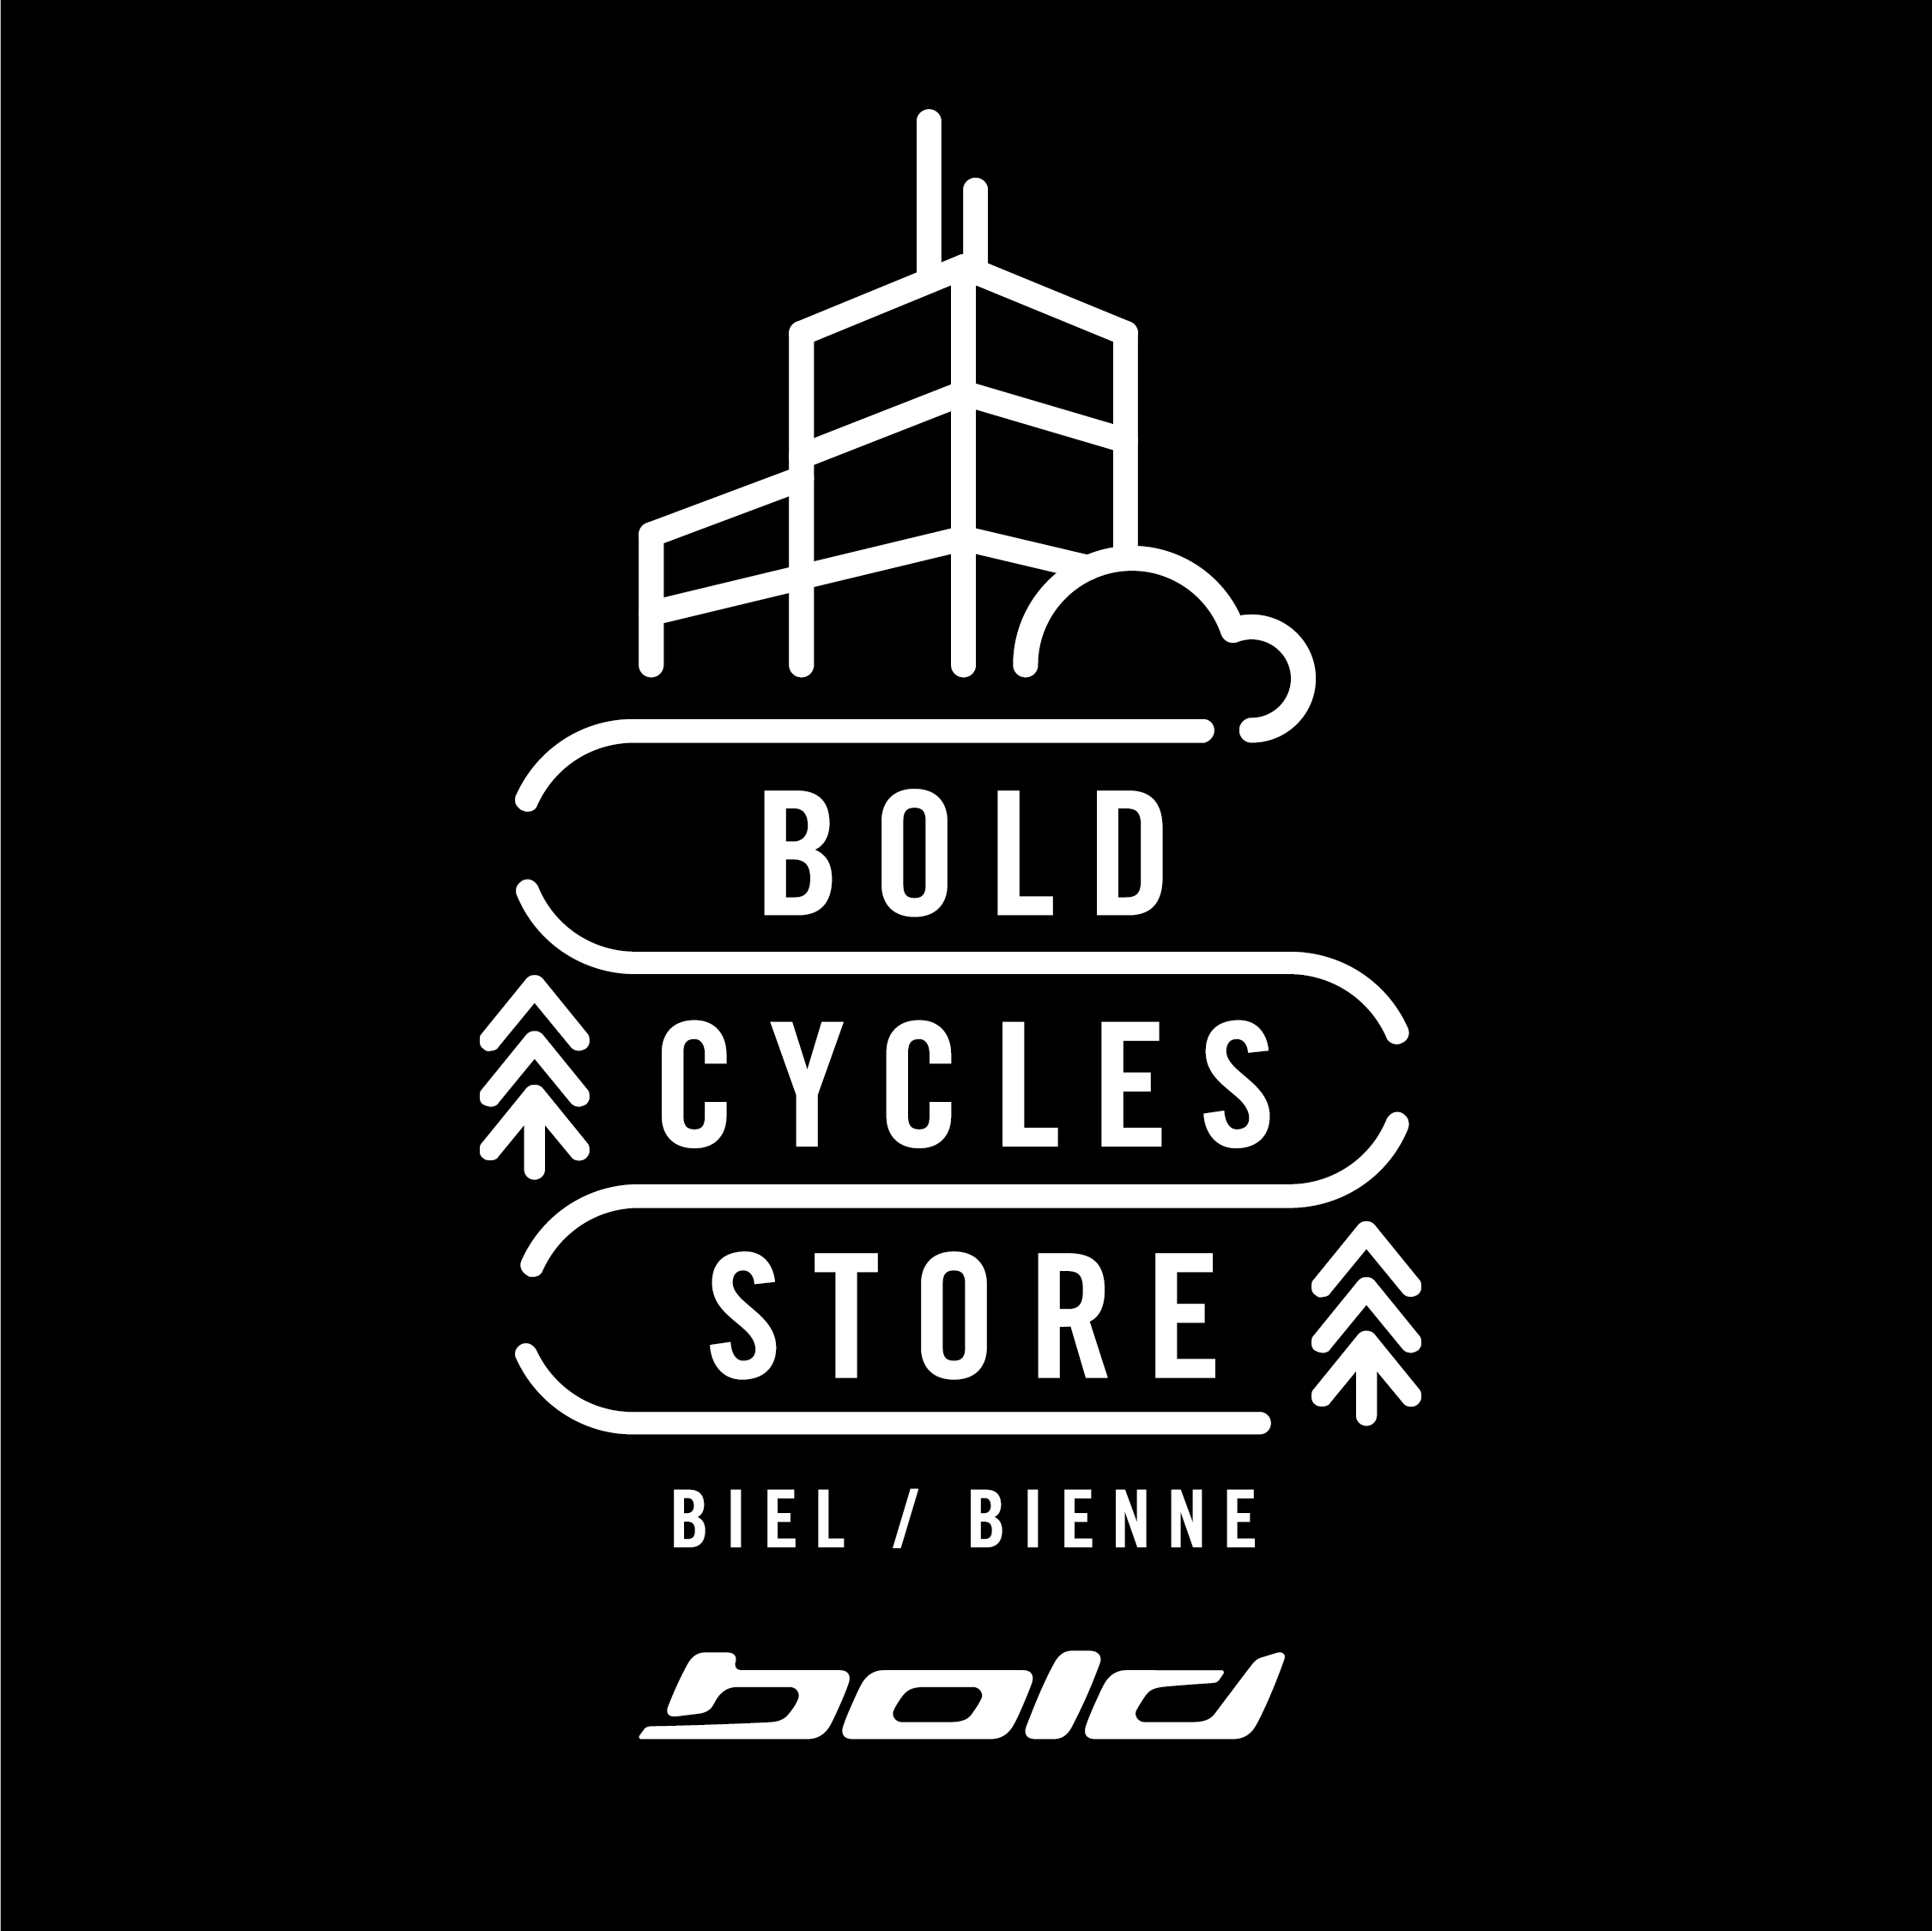 boldcycles.biel